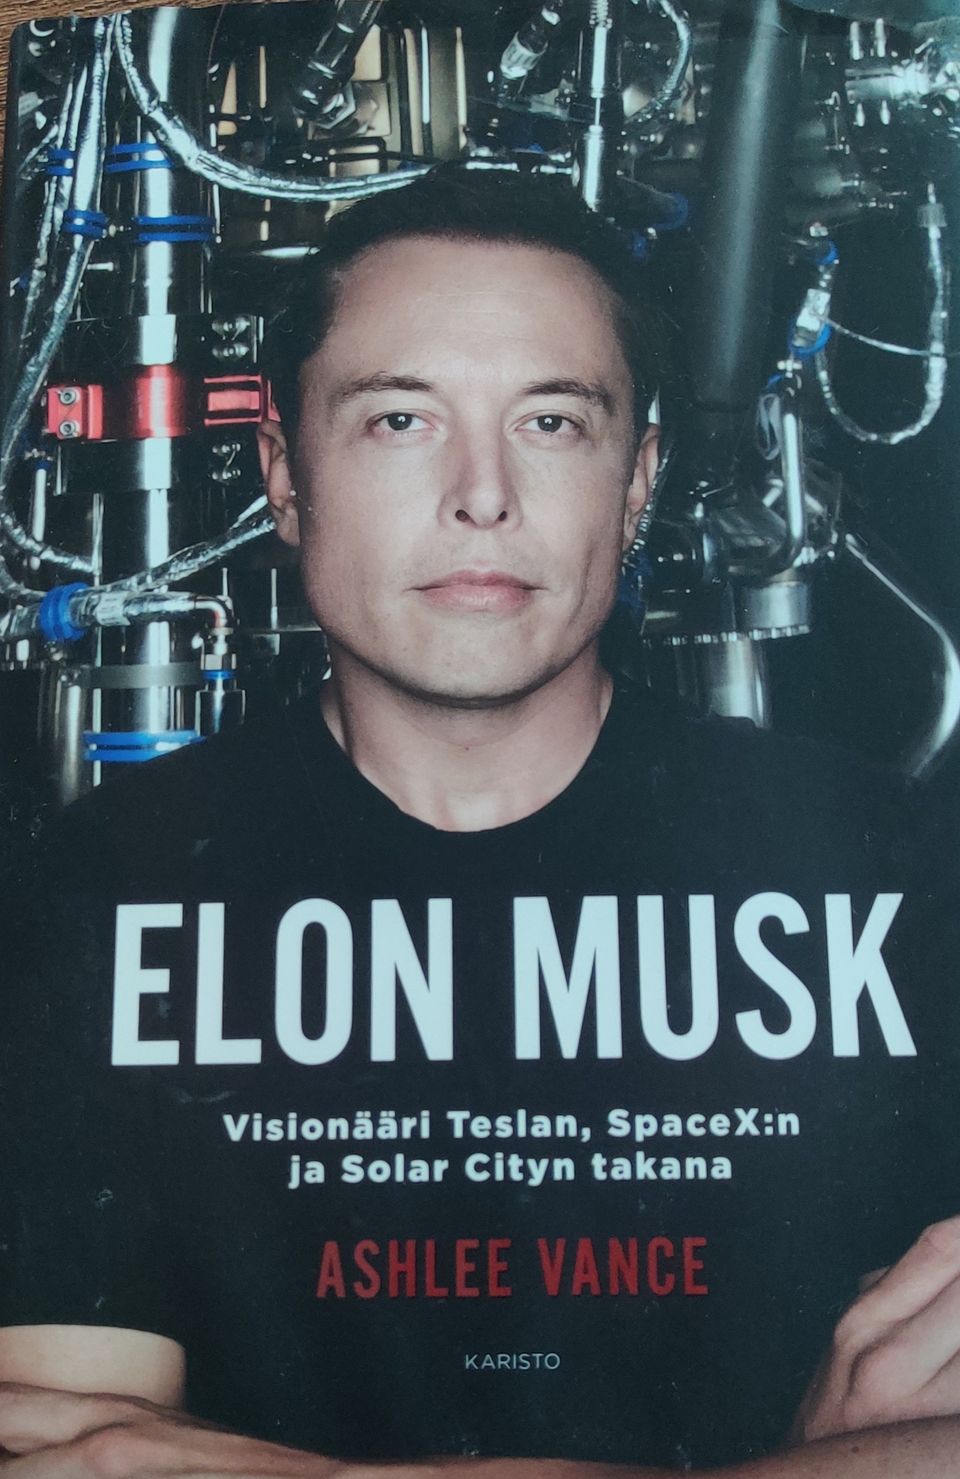 Elon Musk - Visionääri Teslan, SpaceX:n ja Solar Cityn takana